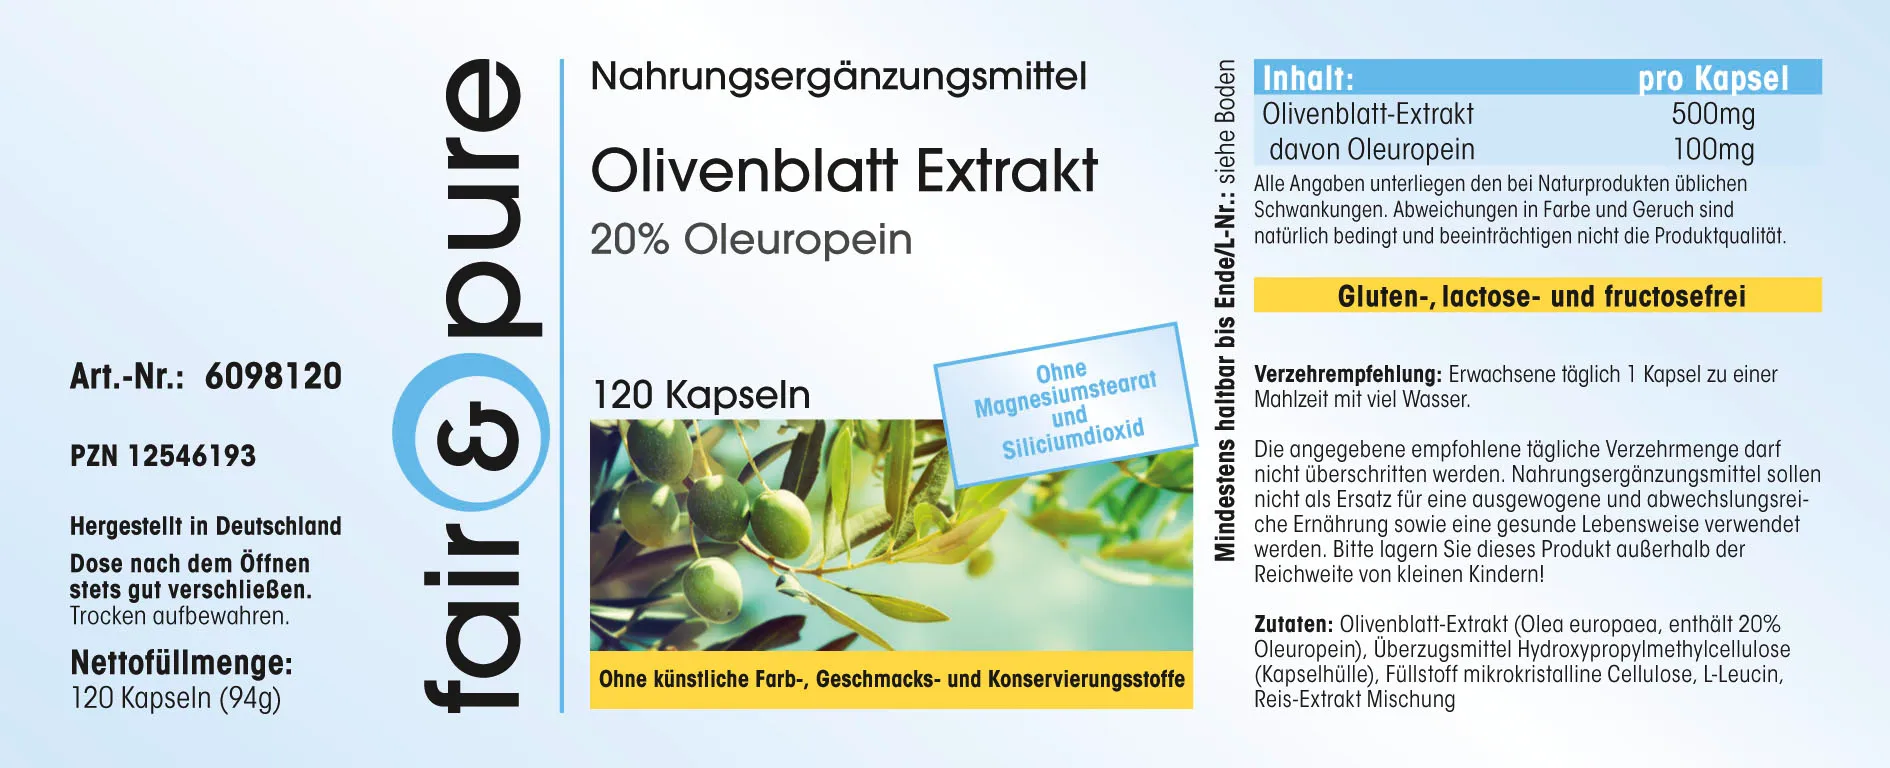 Olivenblatt-Extrakt 500mg